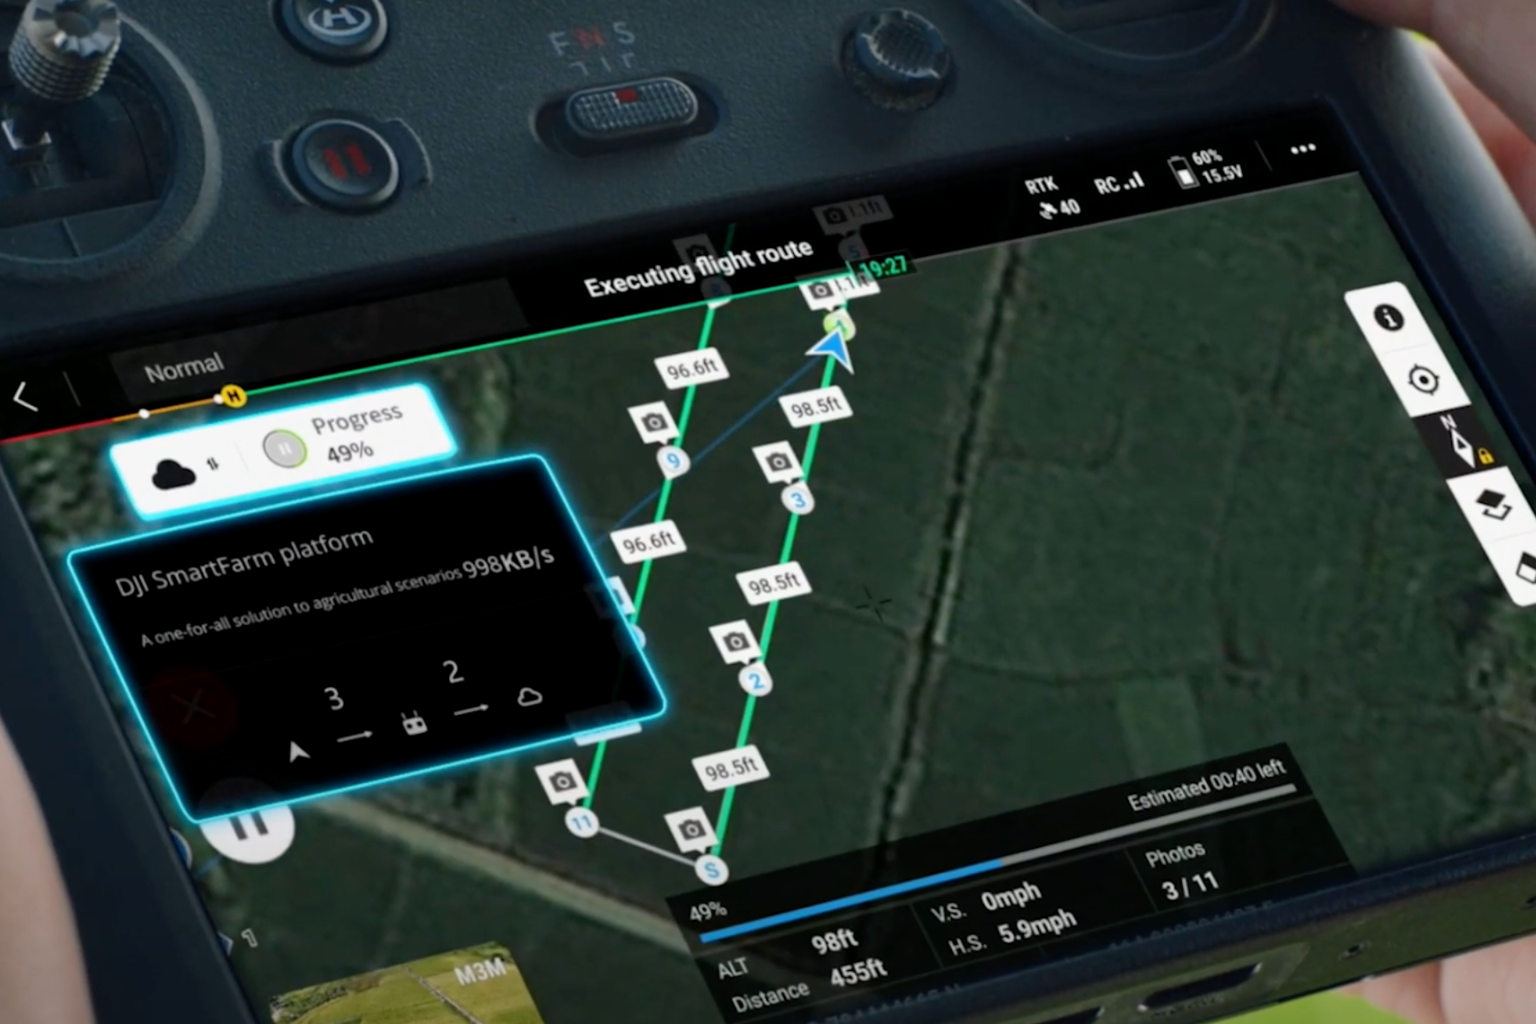 DJI-SmartFarm - Mavic 3M can perform automated field scouting - Skycrab blog